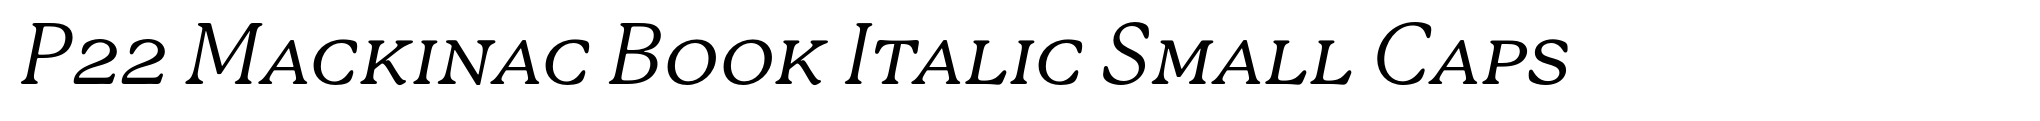 P22 Mackinac Book Italic Small Caps image